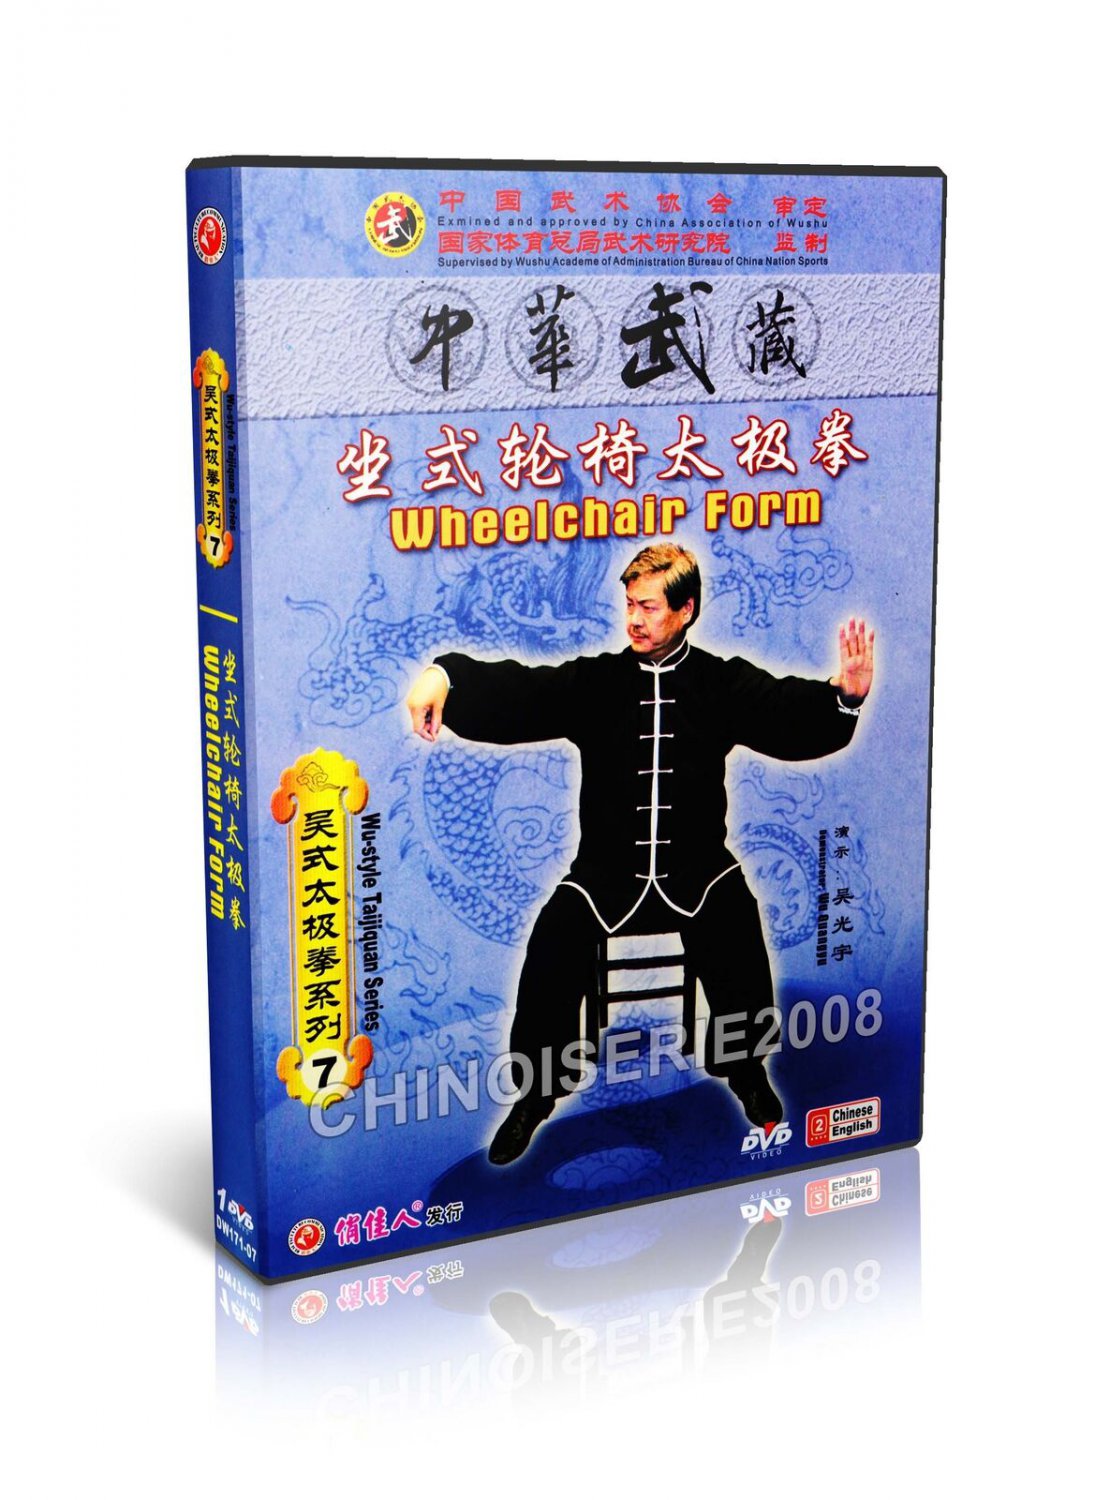 Wu Style Taiji Series Wu Style Tai chi Wheelchair Form - Wu Guangyu DVD